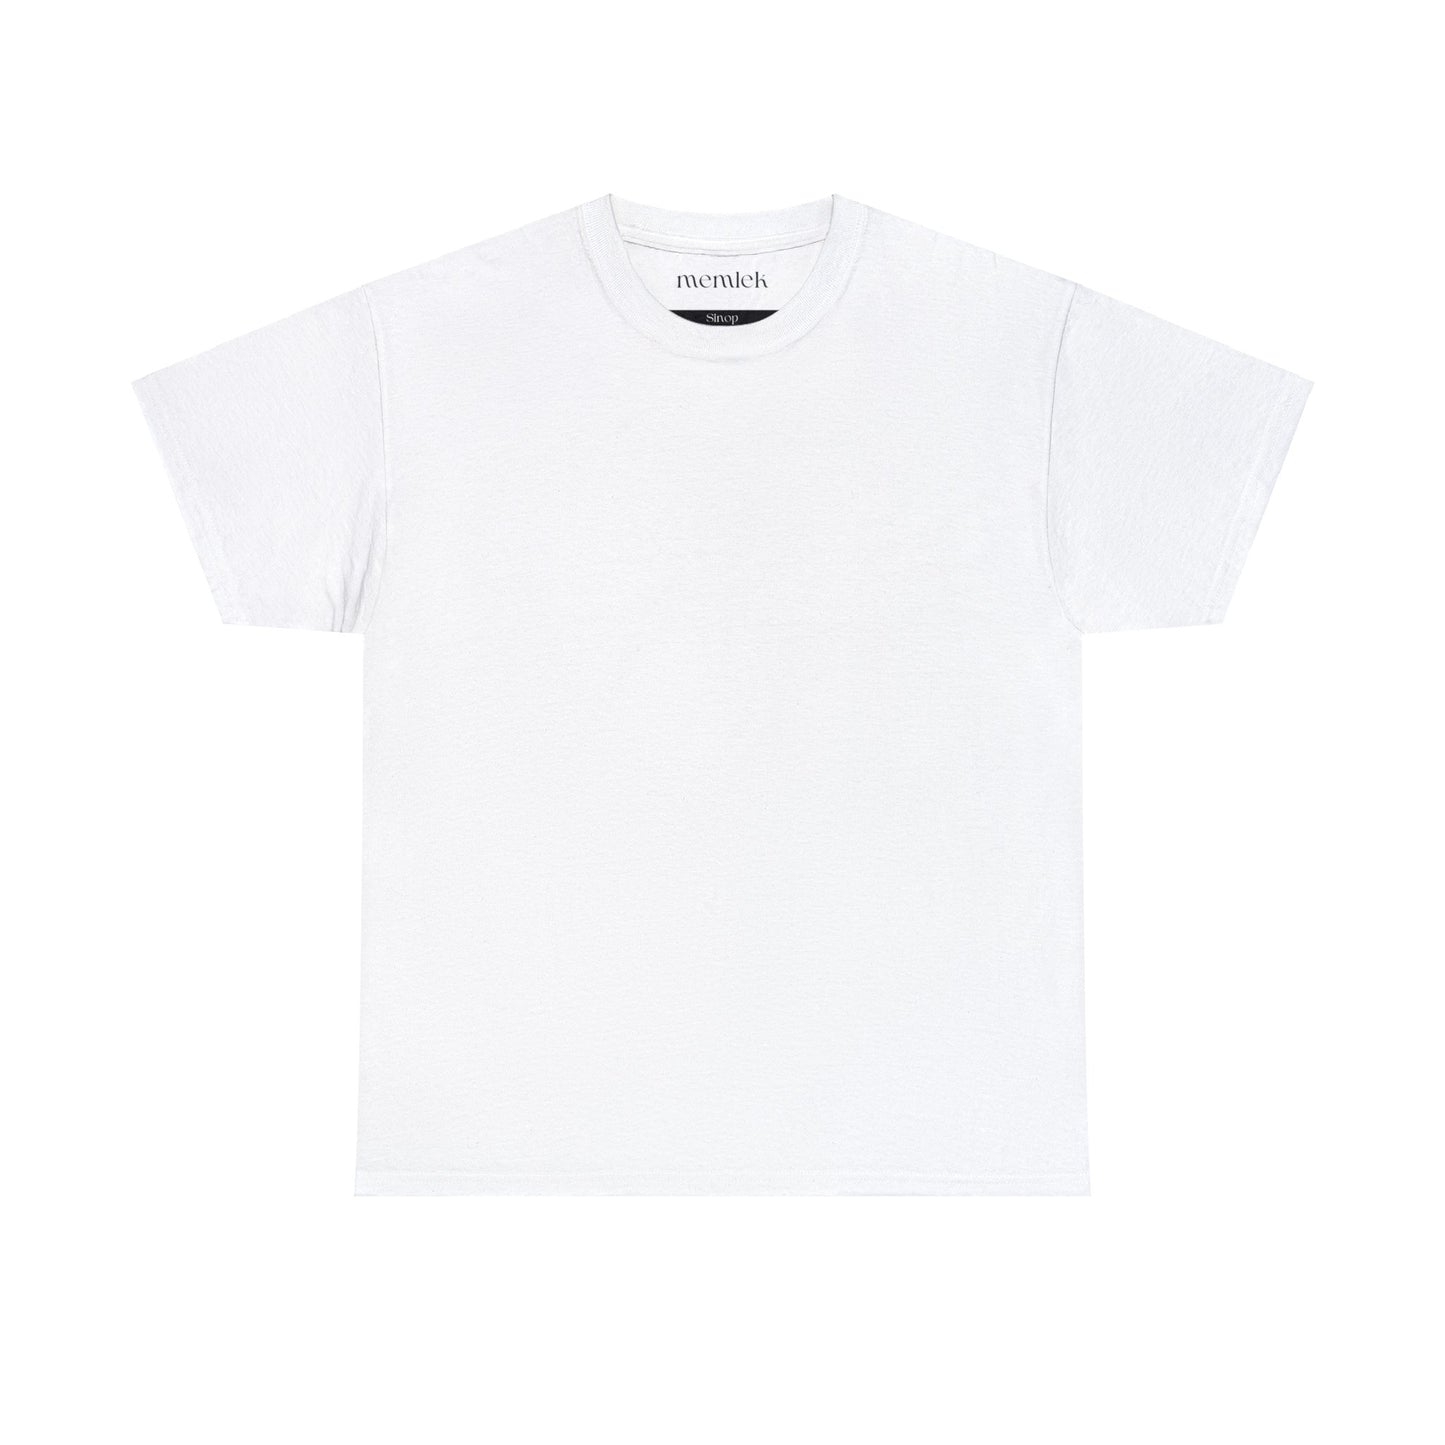 Siyah Lale - 57 Sinop - T-Shirt - Back Print - Black/White